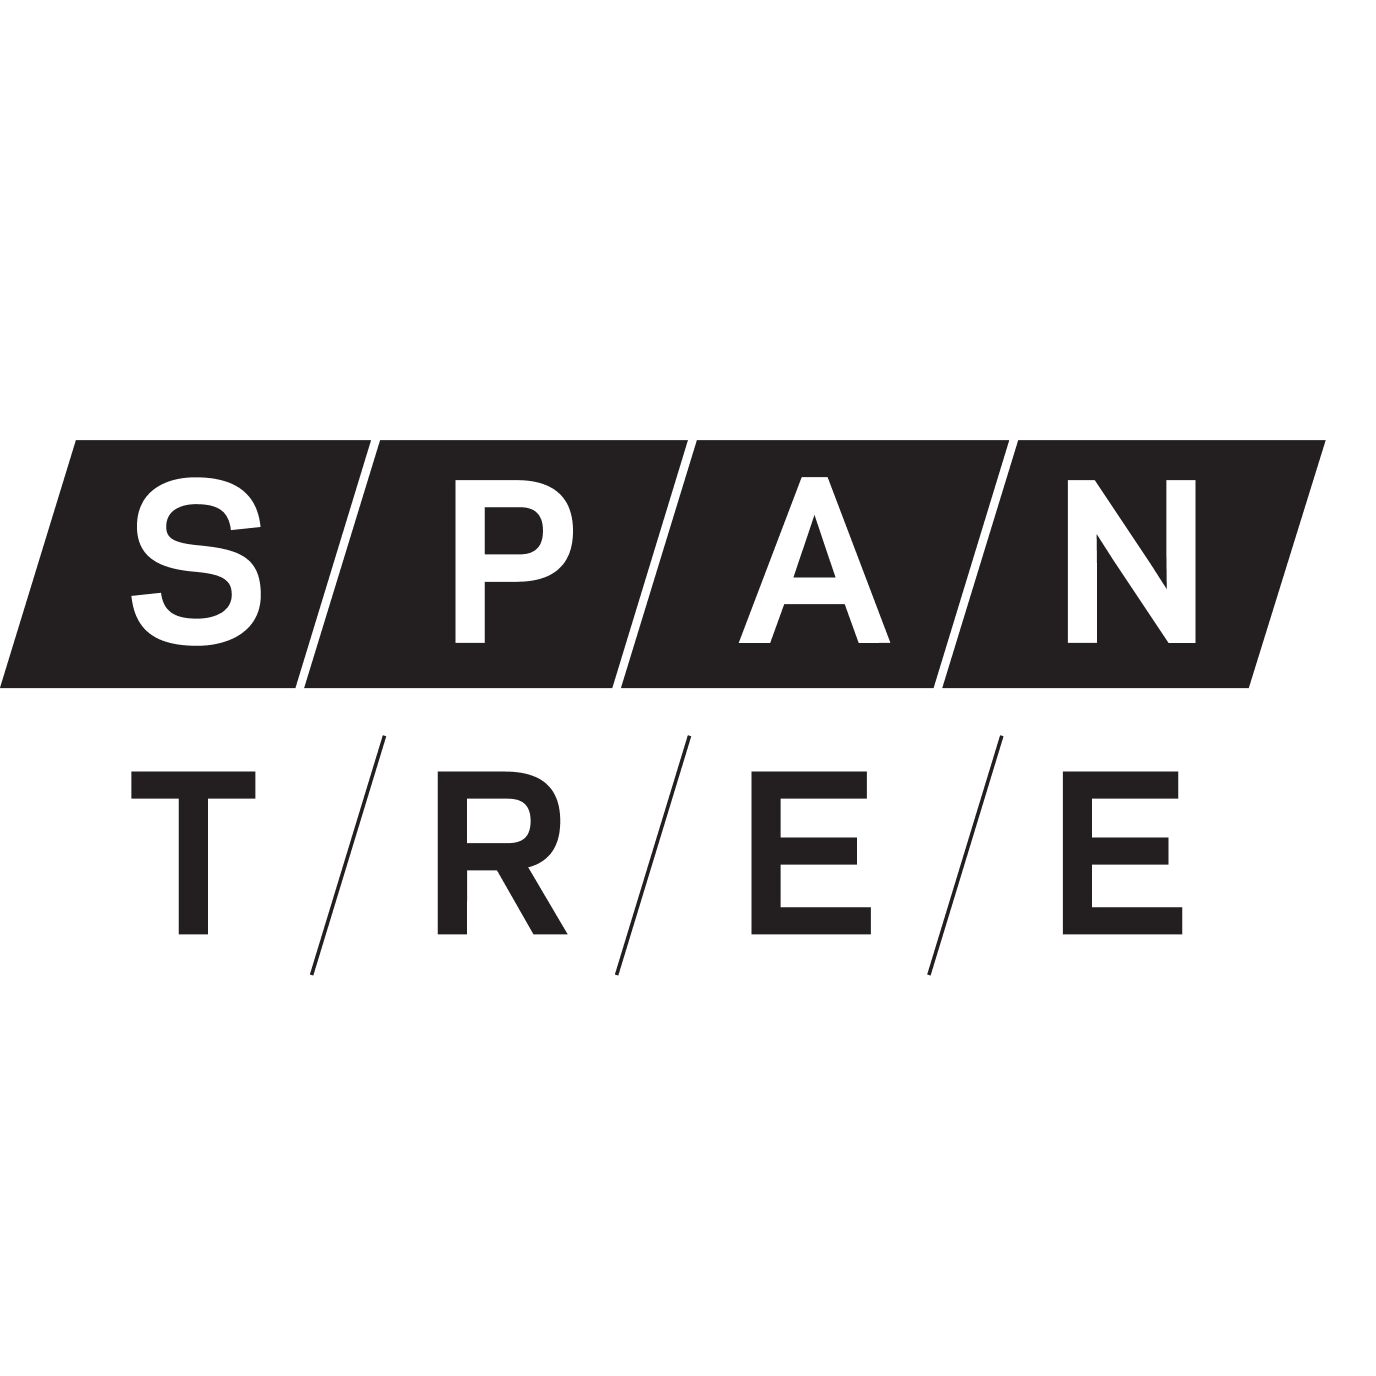 spantree-square-logo-black-on-white - Cedric Hurst.png